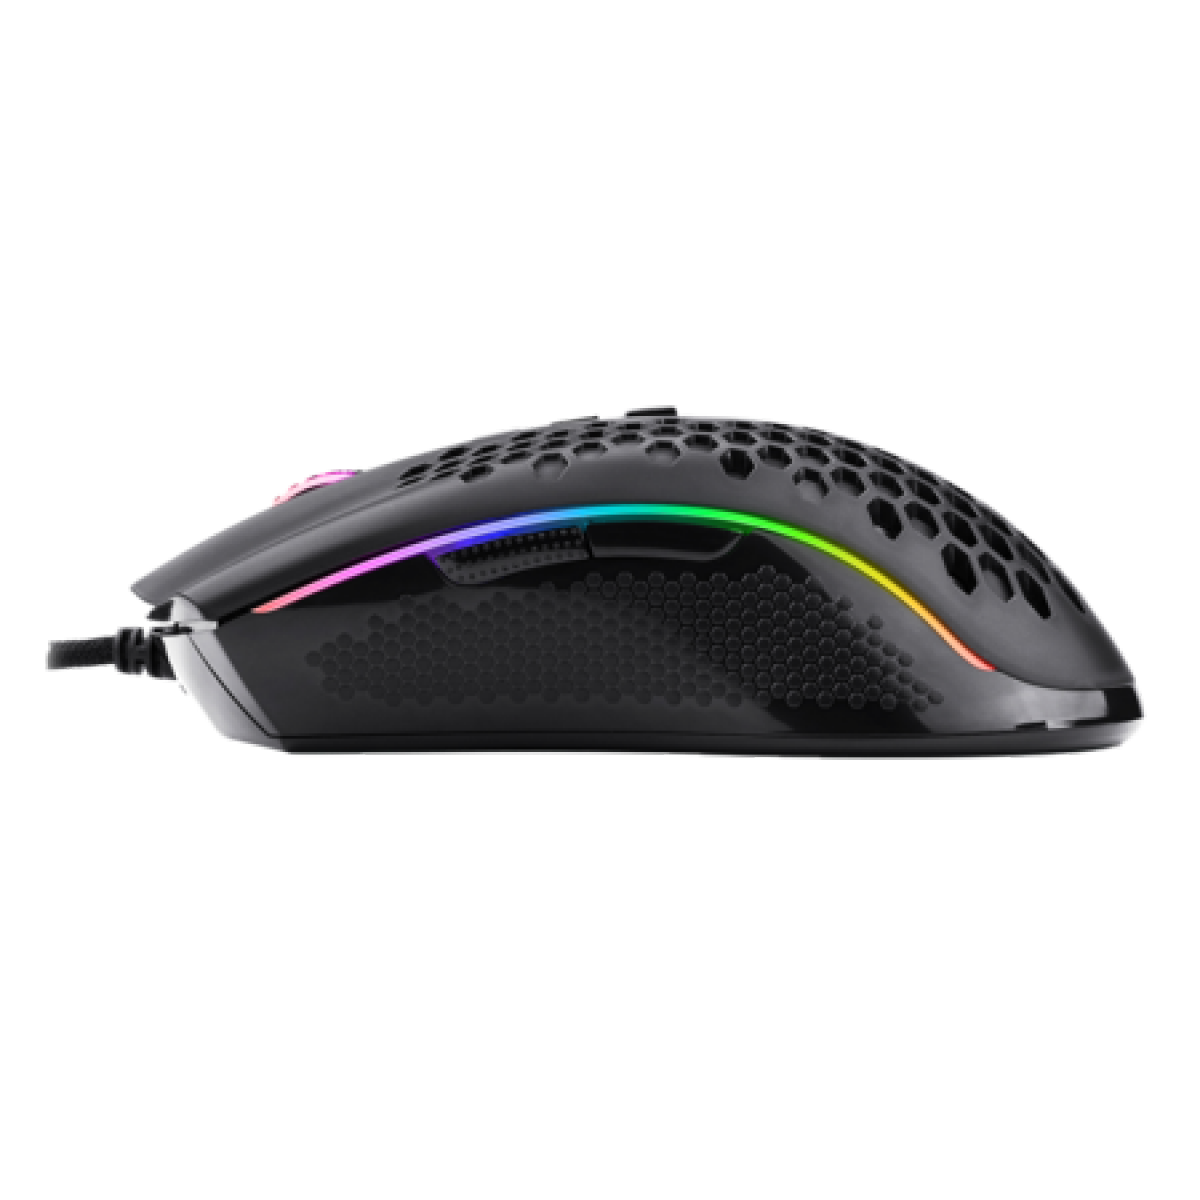 Mouse Gamer Redragon Storm, 12400DPI, 7 Botões Programáveis, RGB, Black, M808-RGB